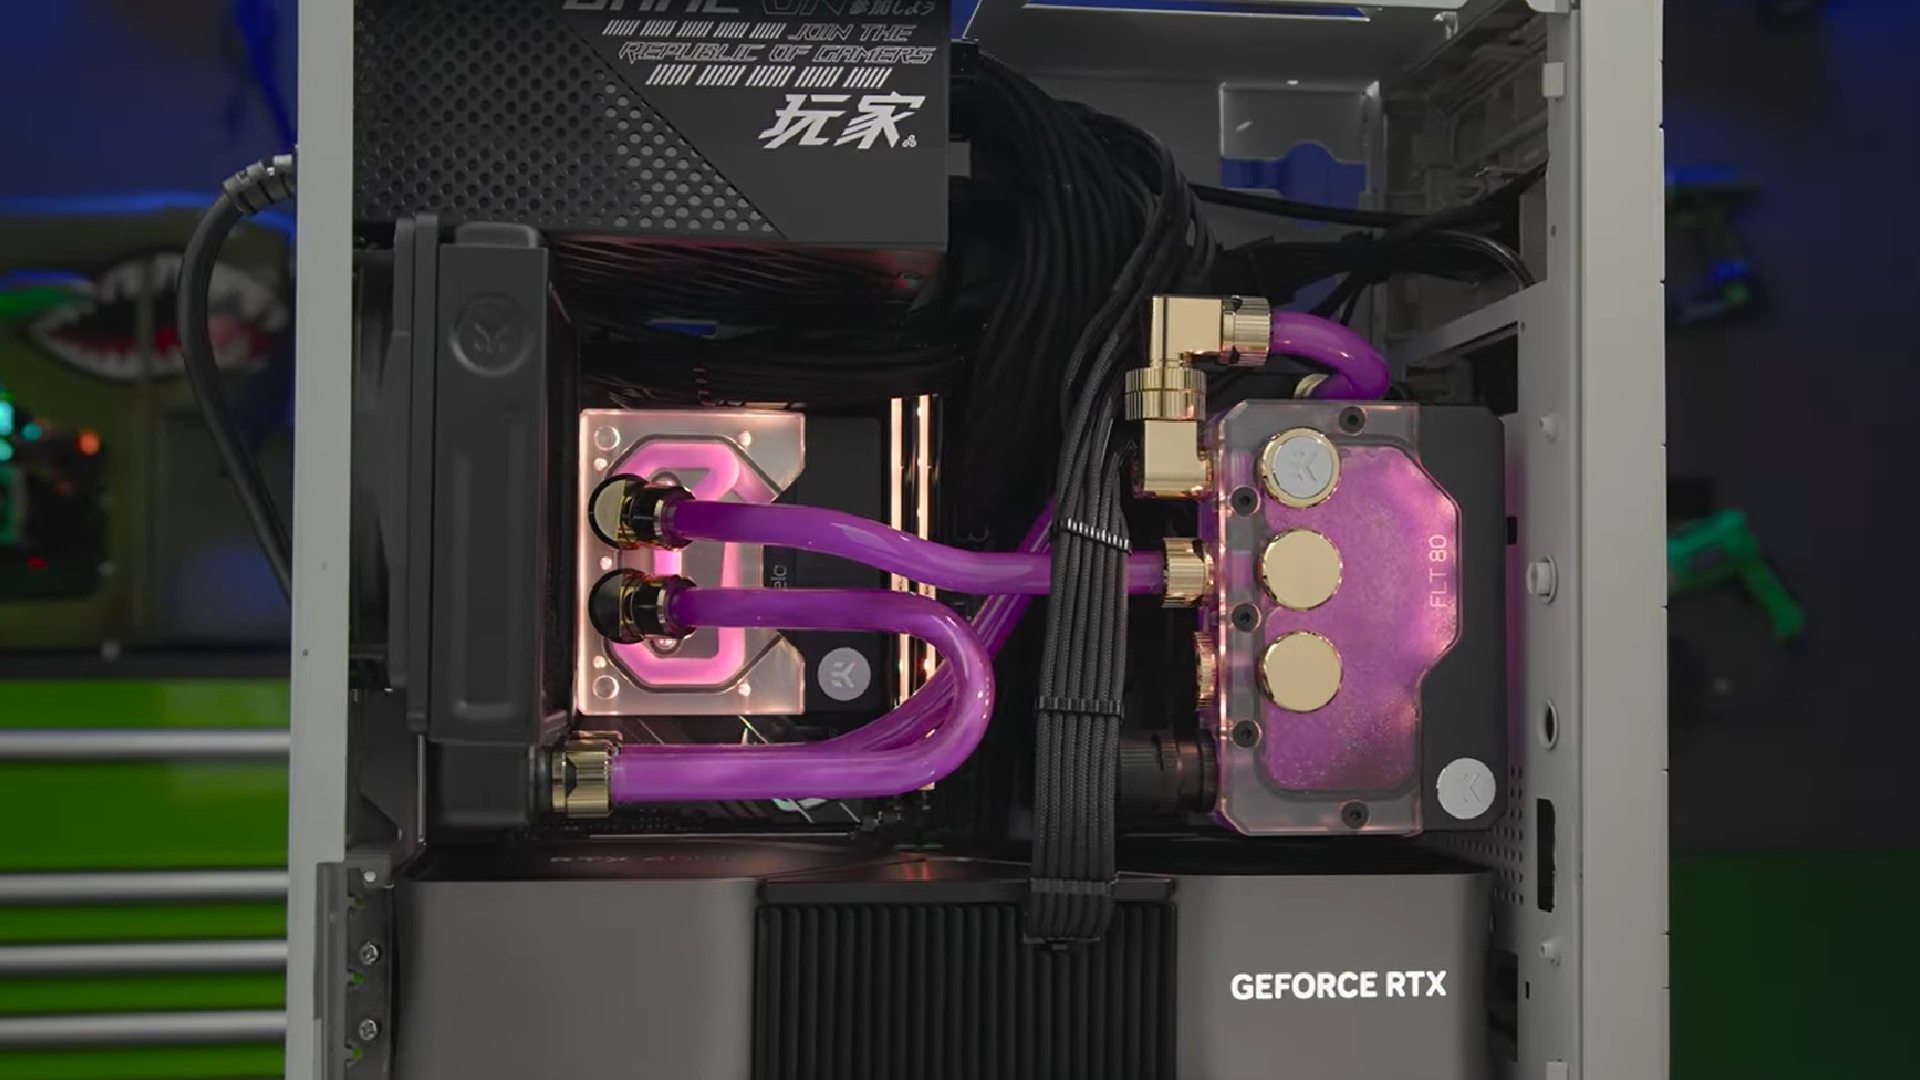 Binnenin Nvidia GeForce Garage sleeper RTX 4090 gaming-pc met paarse AIO-koeler en onderste grafische kaart